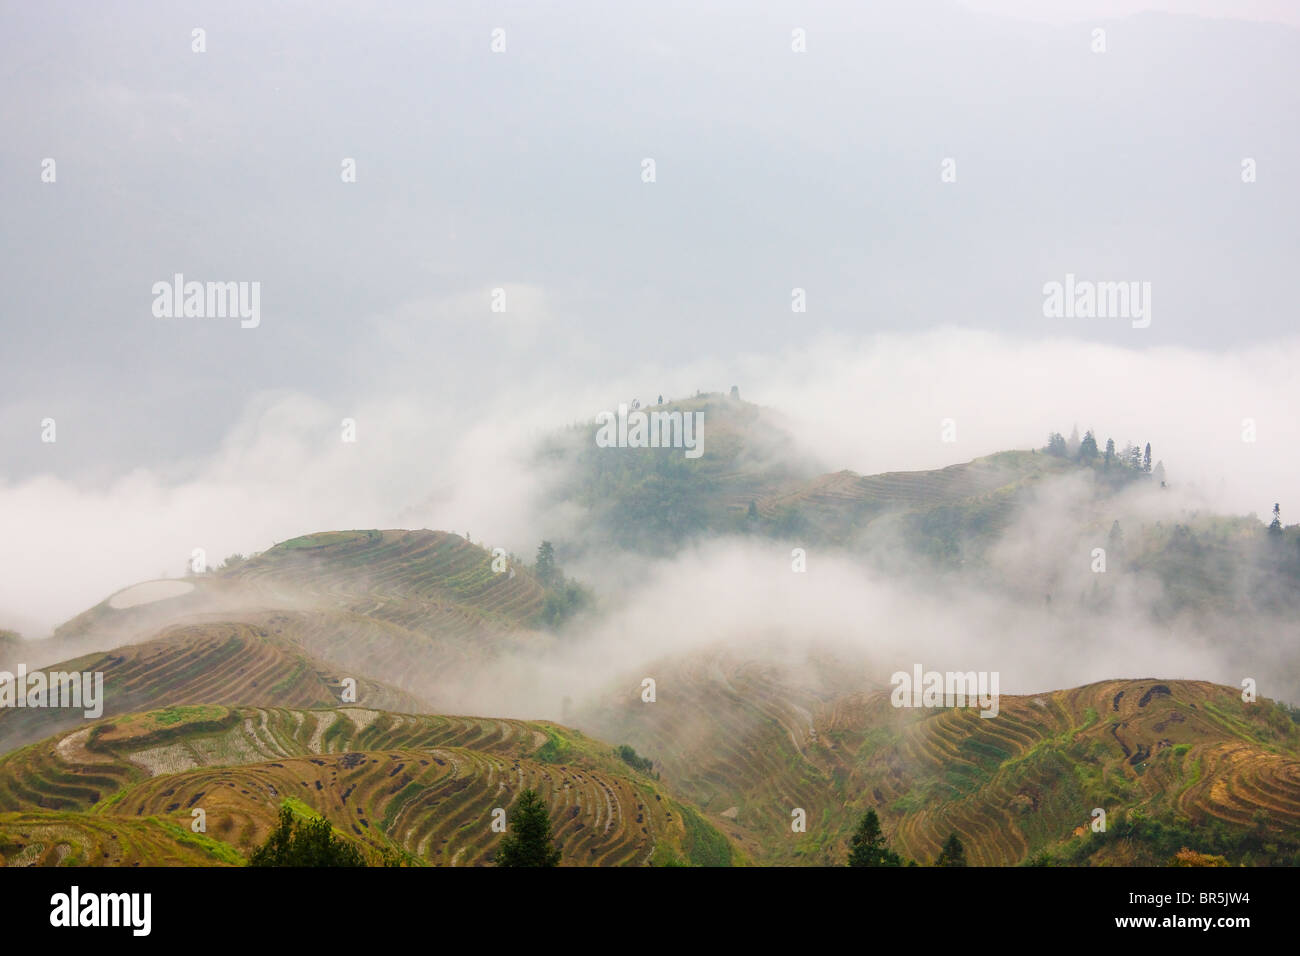 Rice terraces in the mountain in mist, Longsheng, Guangxi, China Stock Photo